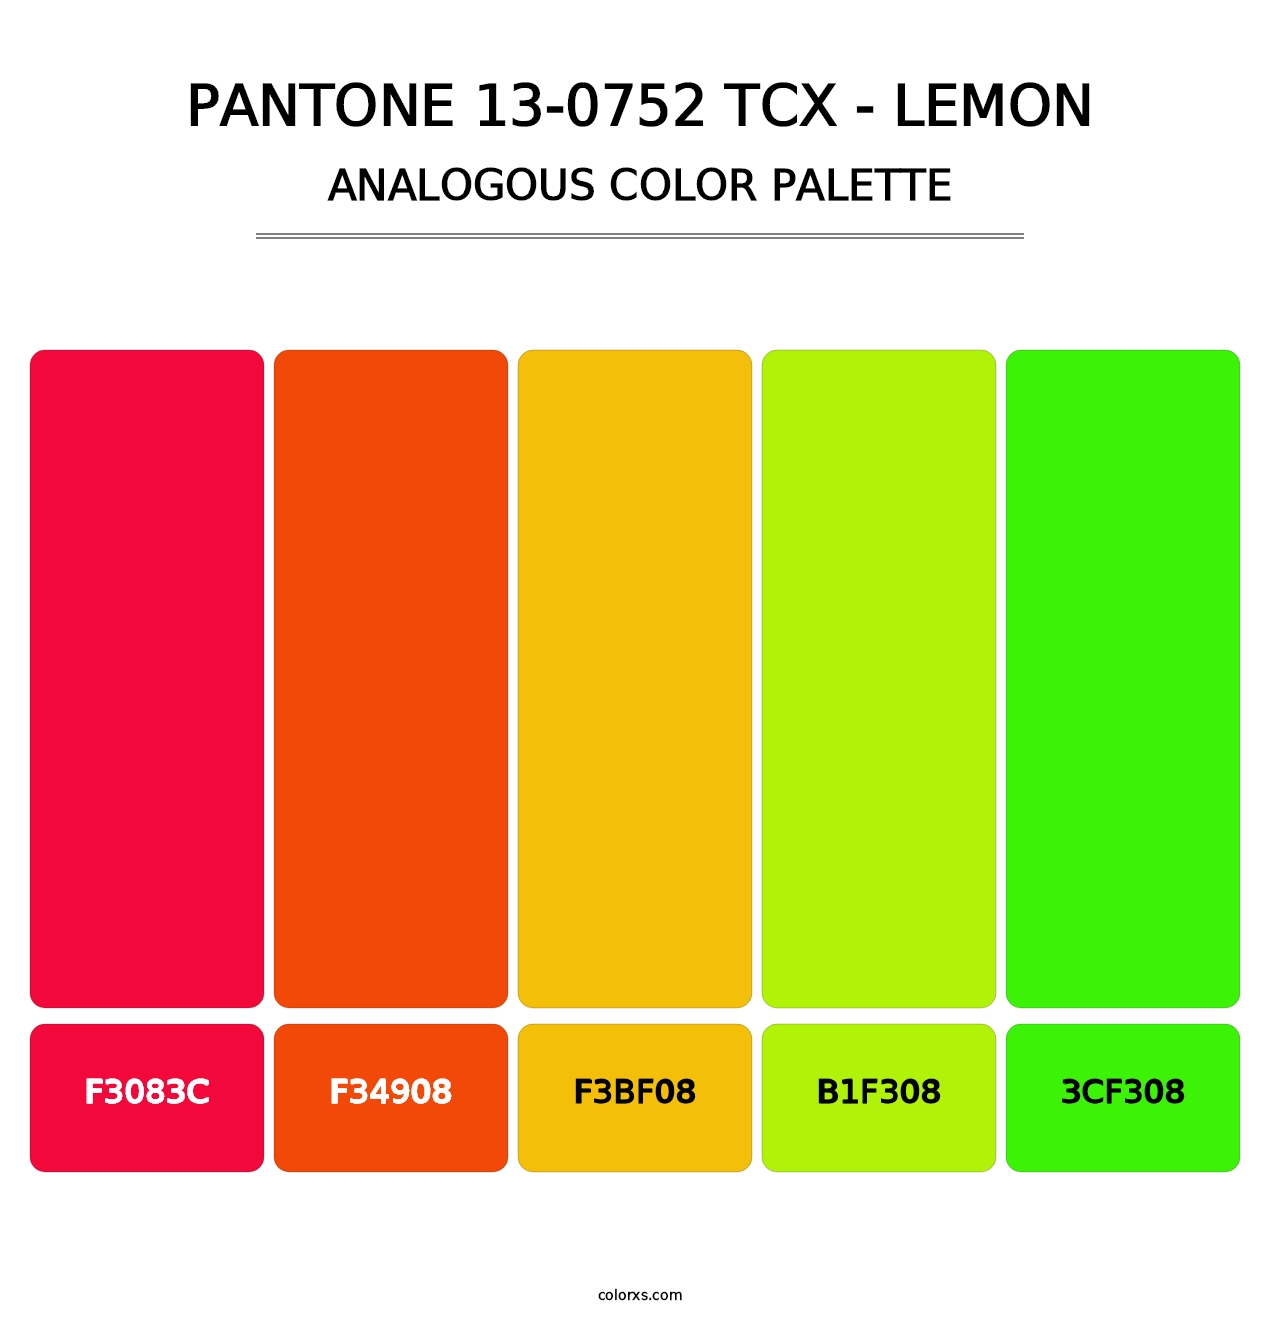 PANTONE 13-0752 TCX - Lemon - Analogous Color Palette